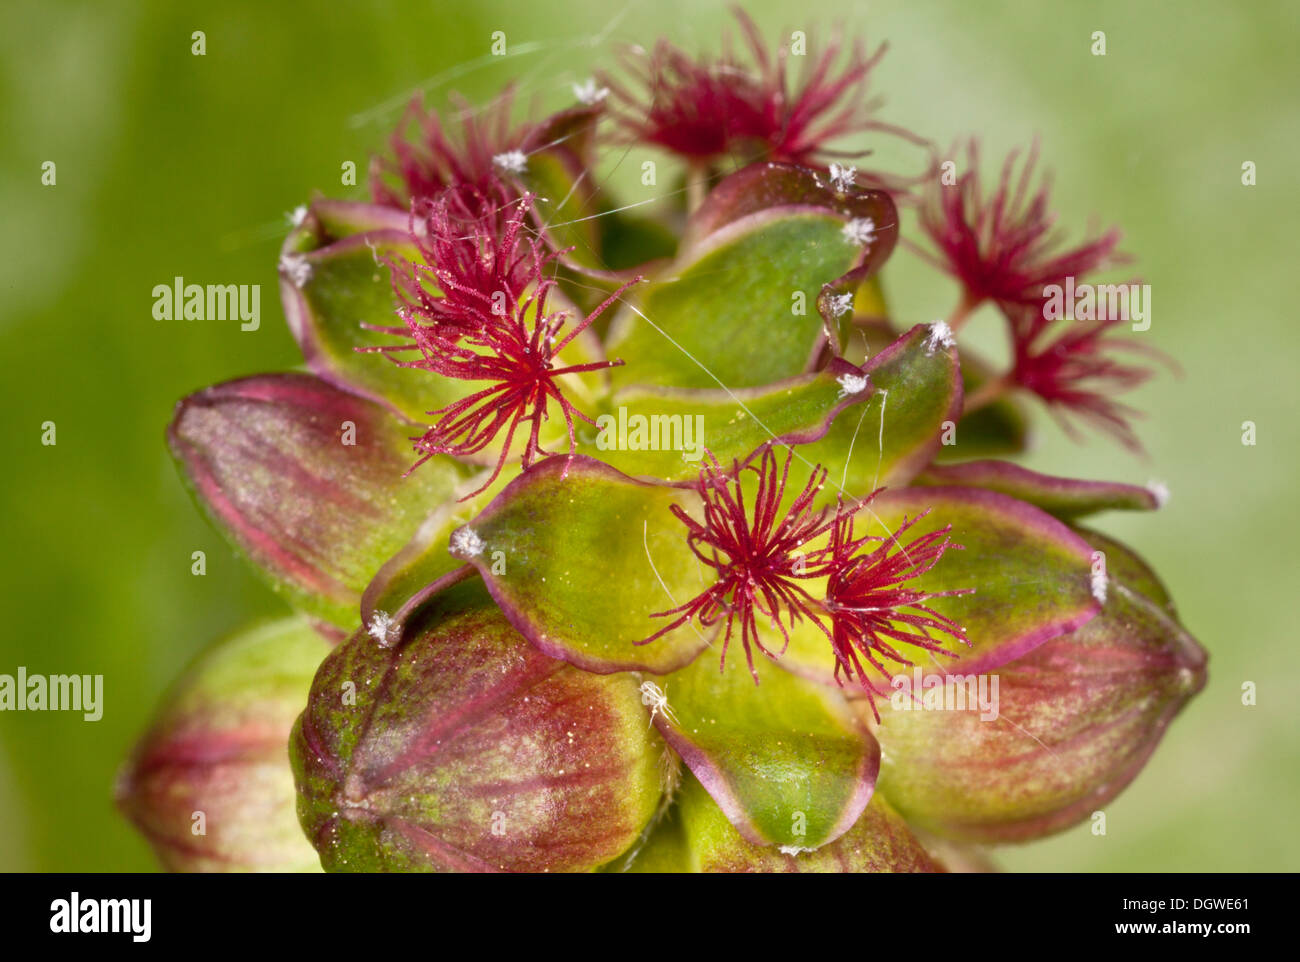 Salad Burnet, Poterium sanguisorba flower head, showing mainly female flowers. Dorset. Stock Photo